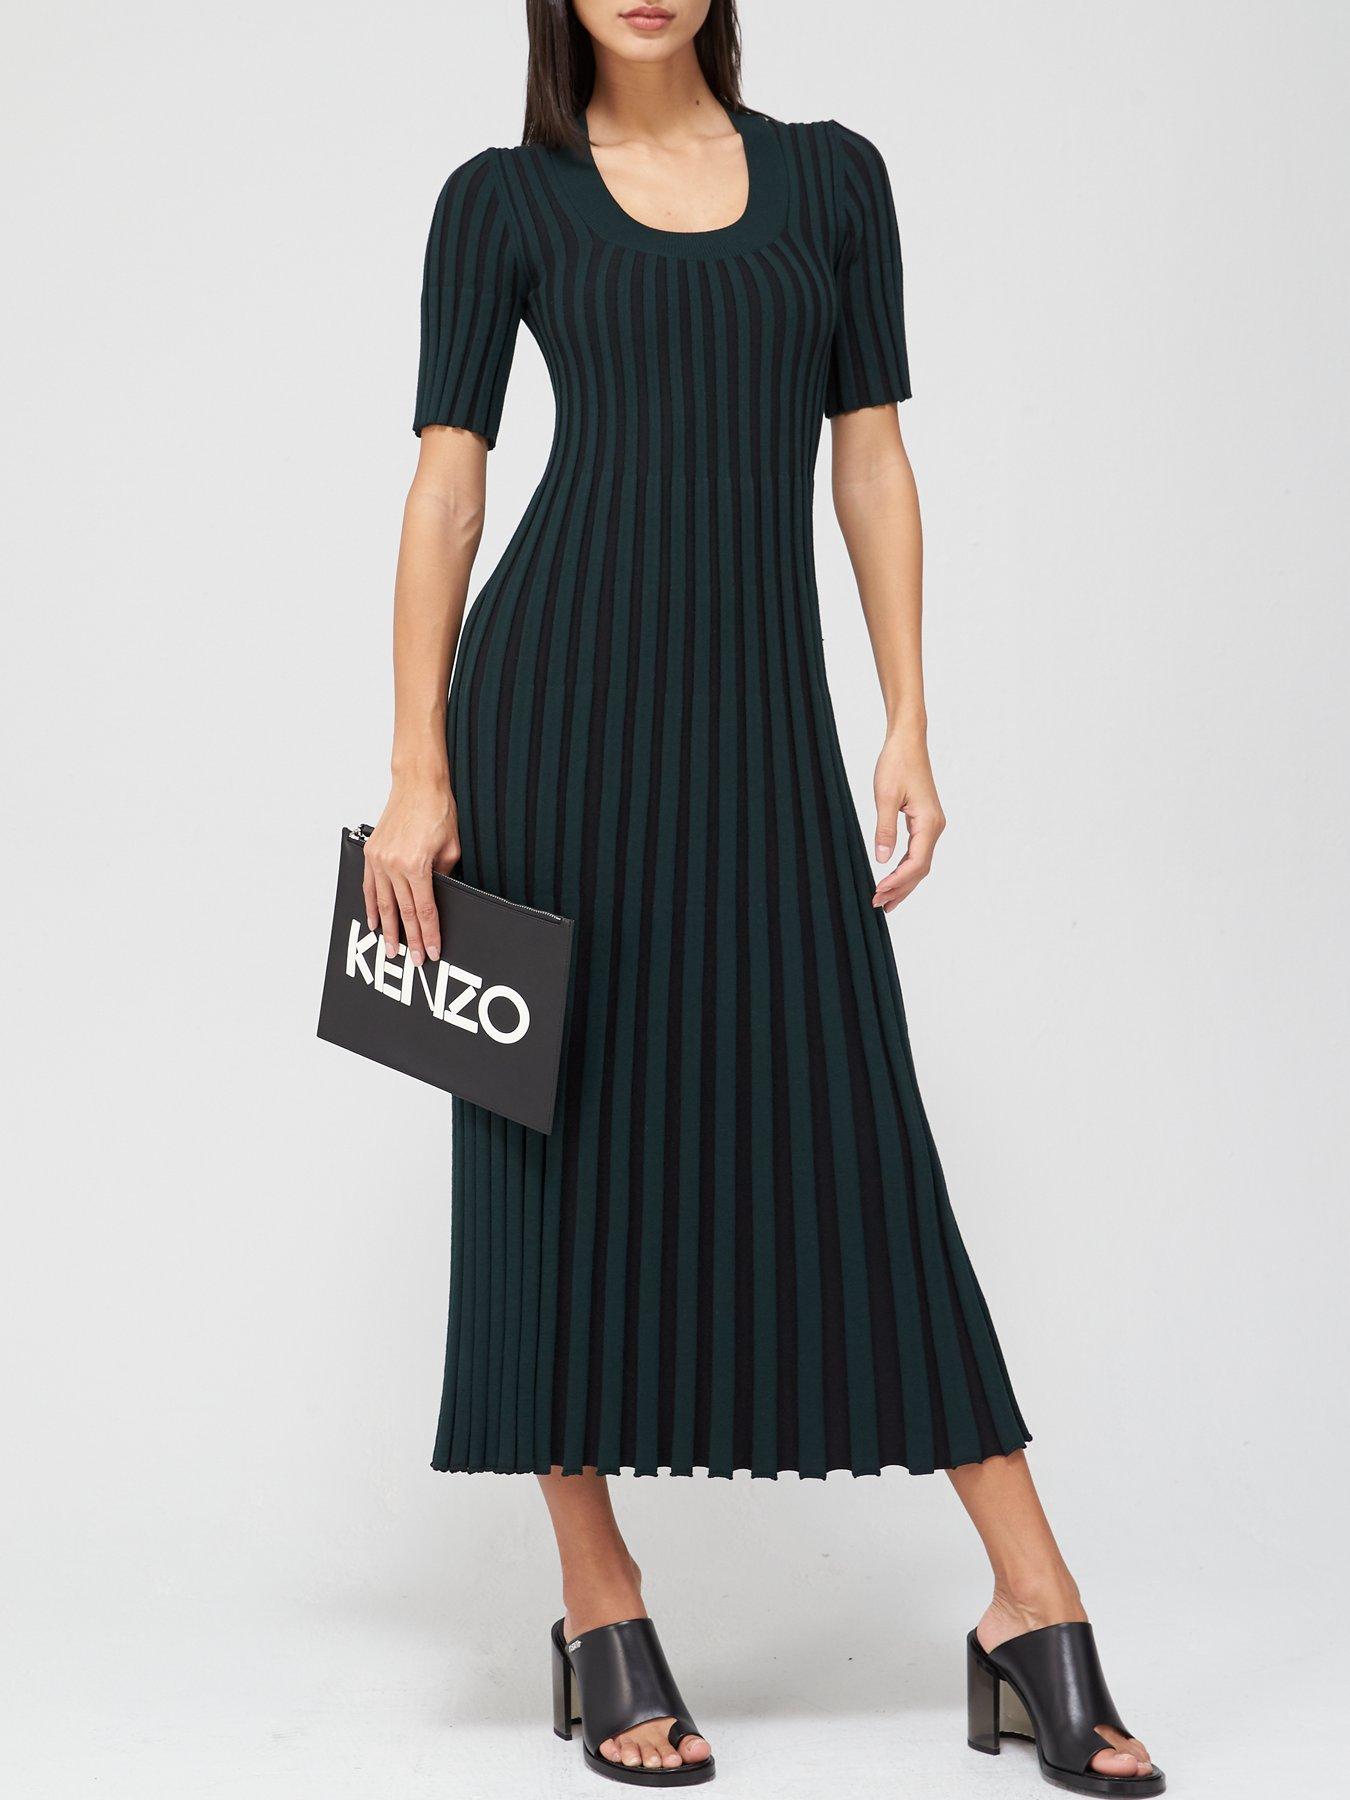 Kenzo Pleated Dress – Black/Green 